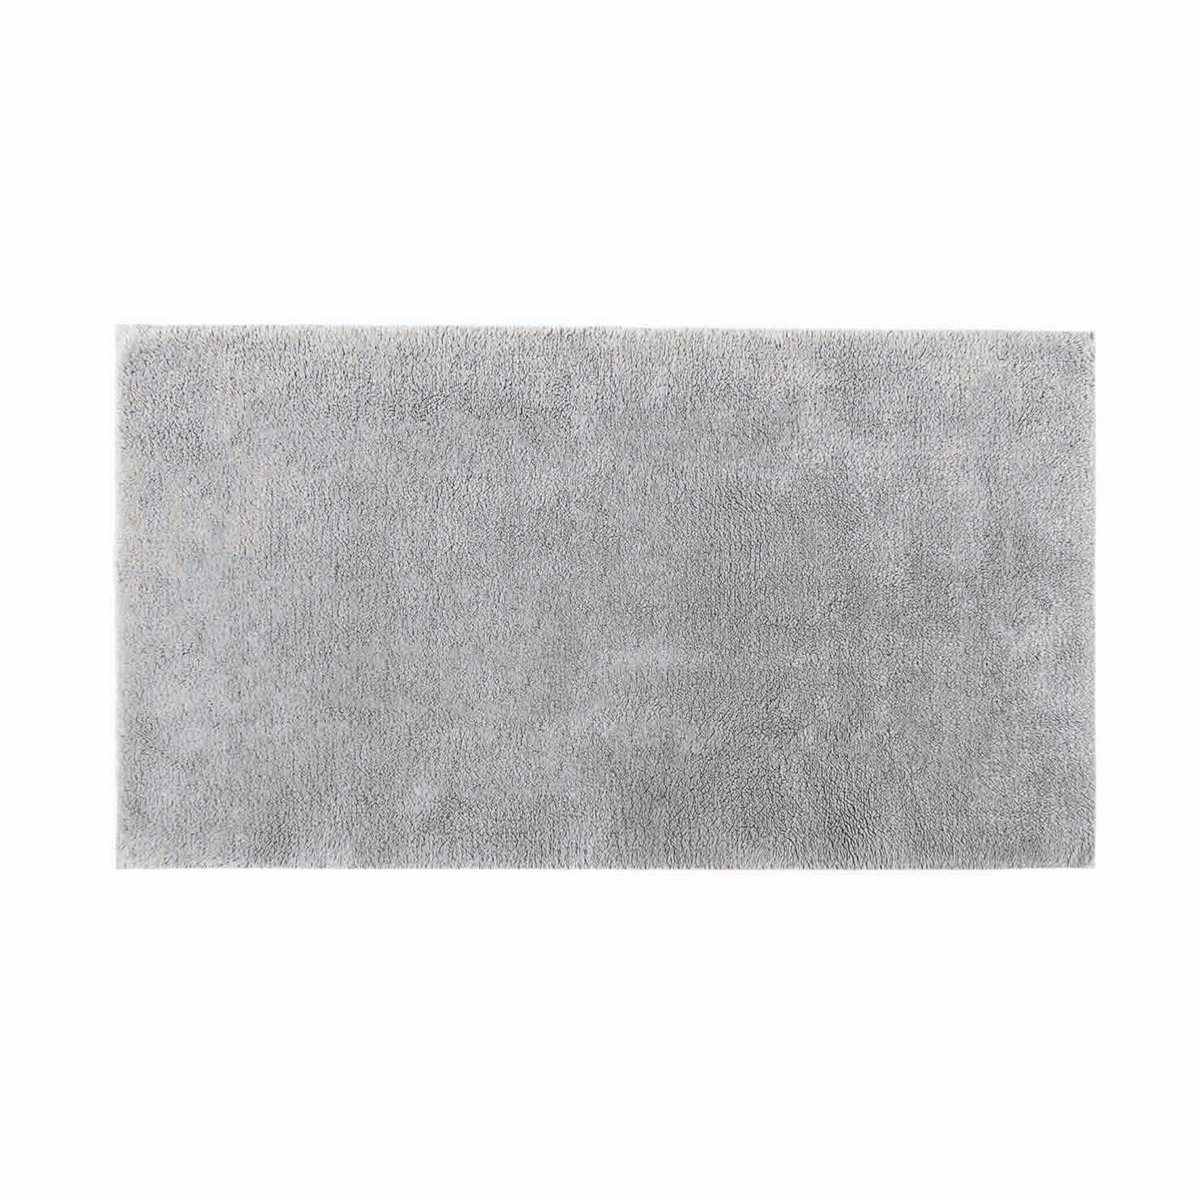 Silver Color Graccioza Plain Egoist Bath Rug against a White Background